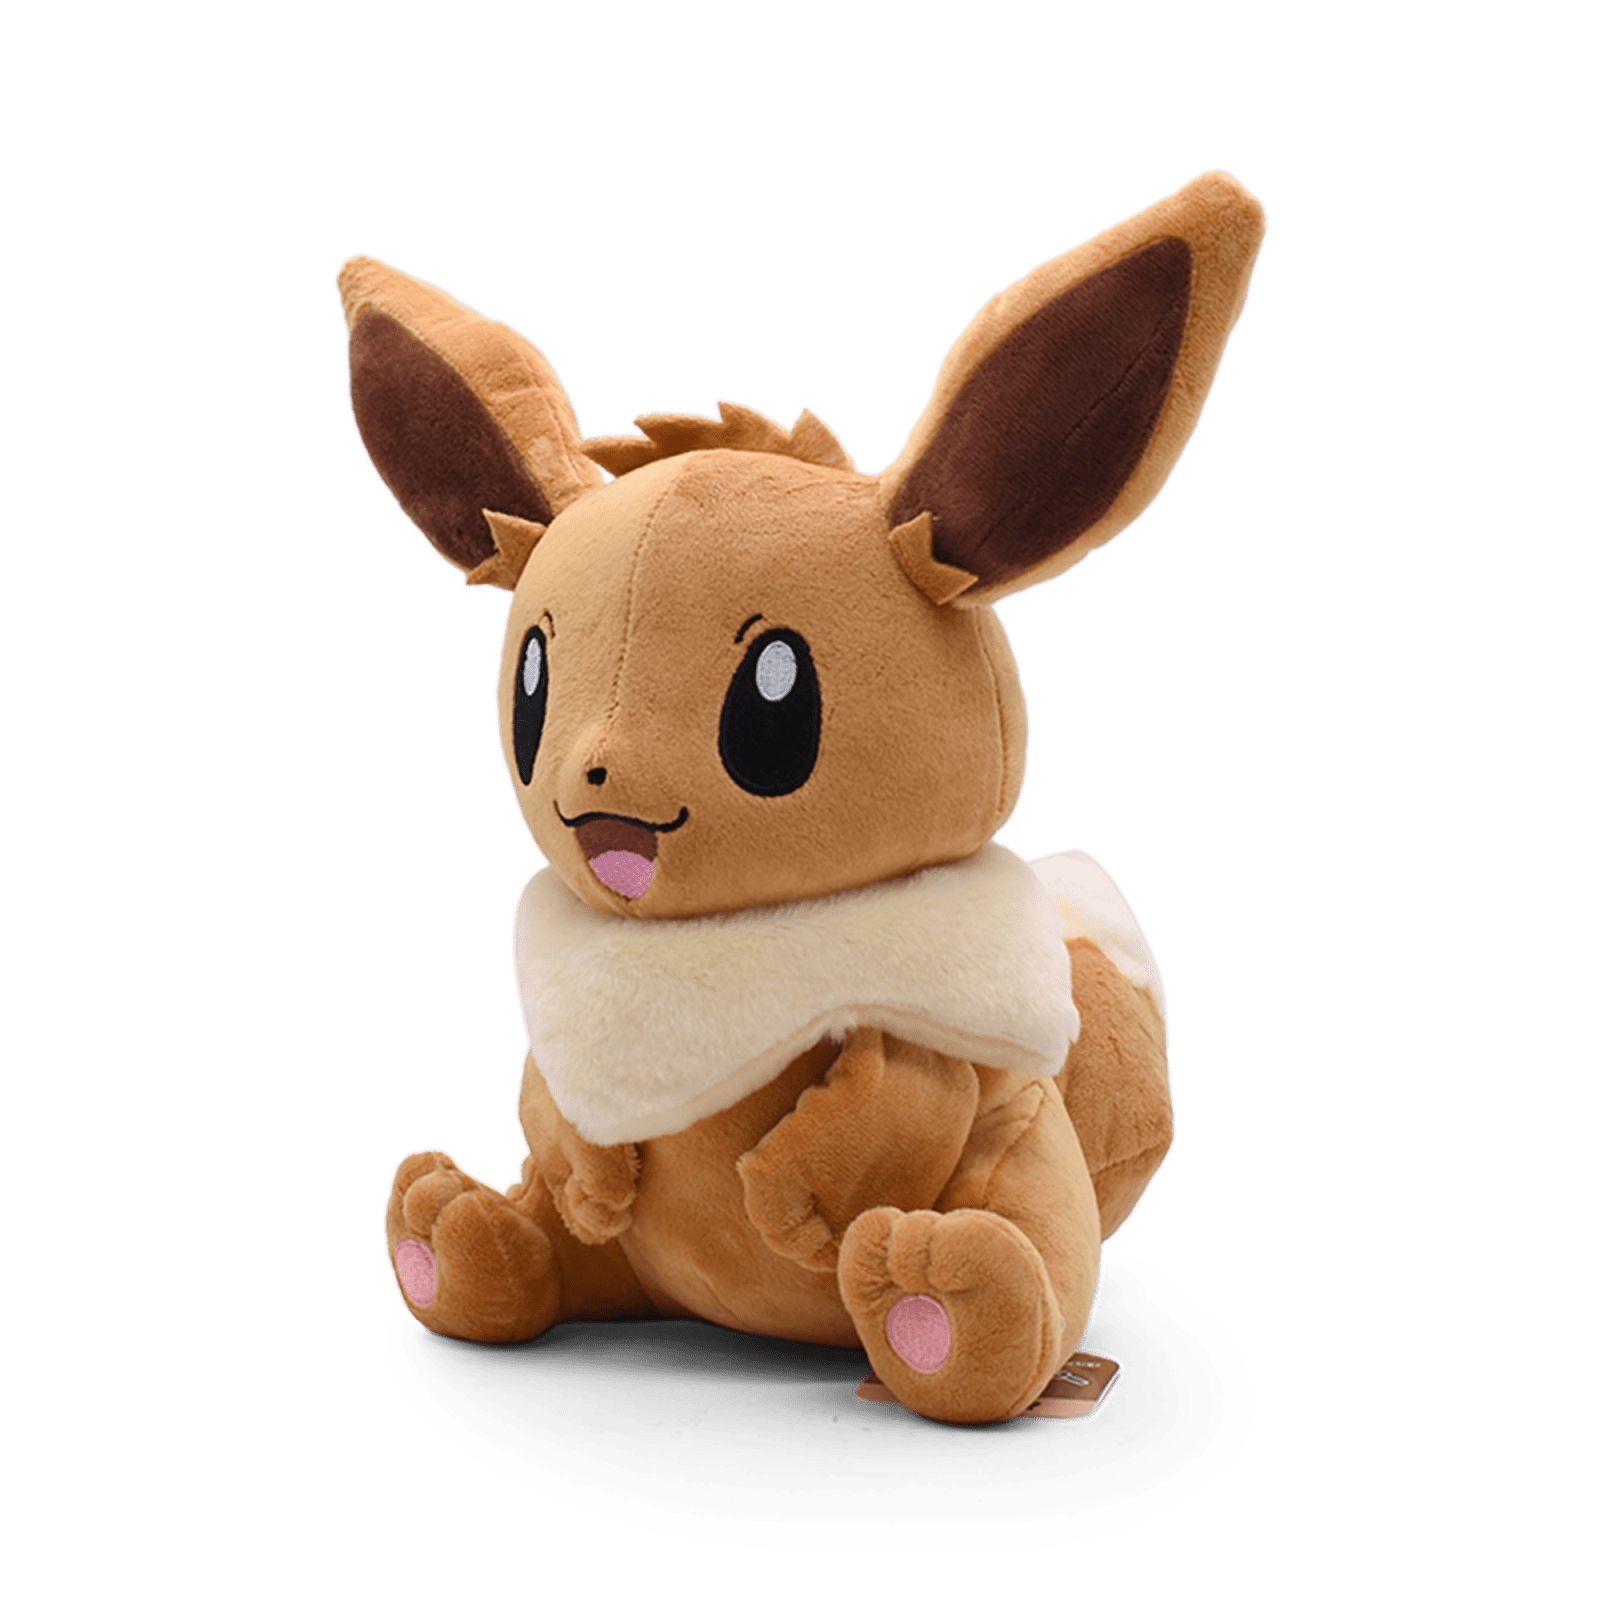 SeekFunning Pokémon Plush Eevee 12" Stuffed Animals Toy, Large, Brown, Great Gifts for Children